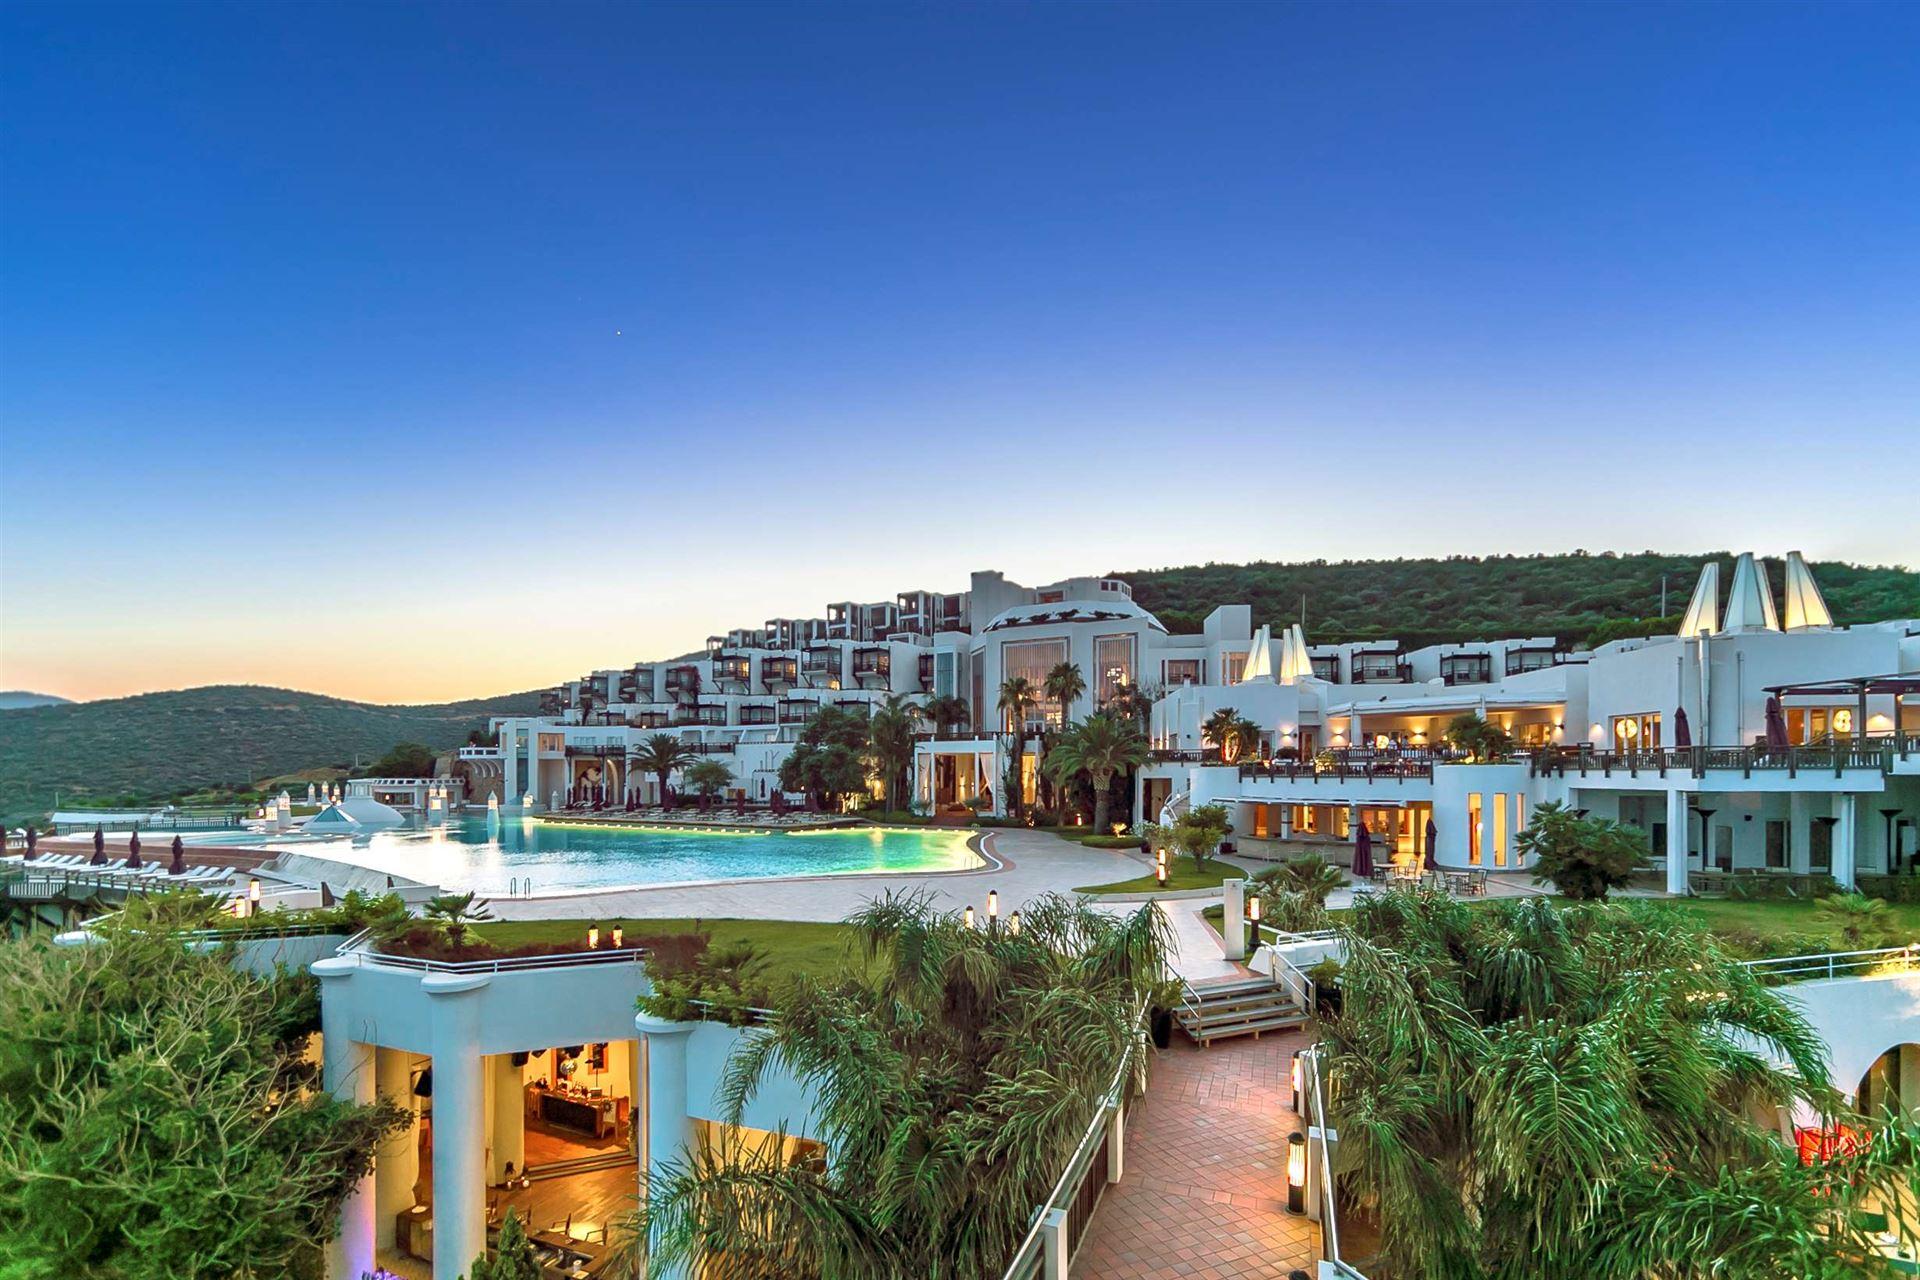 Kempinski Hotel Barbaros Bay Bodrum luxe hotel deals